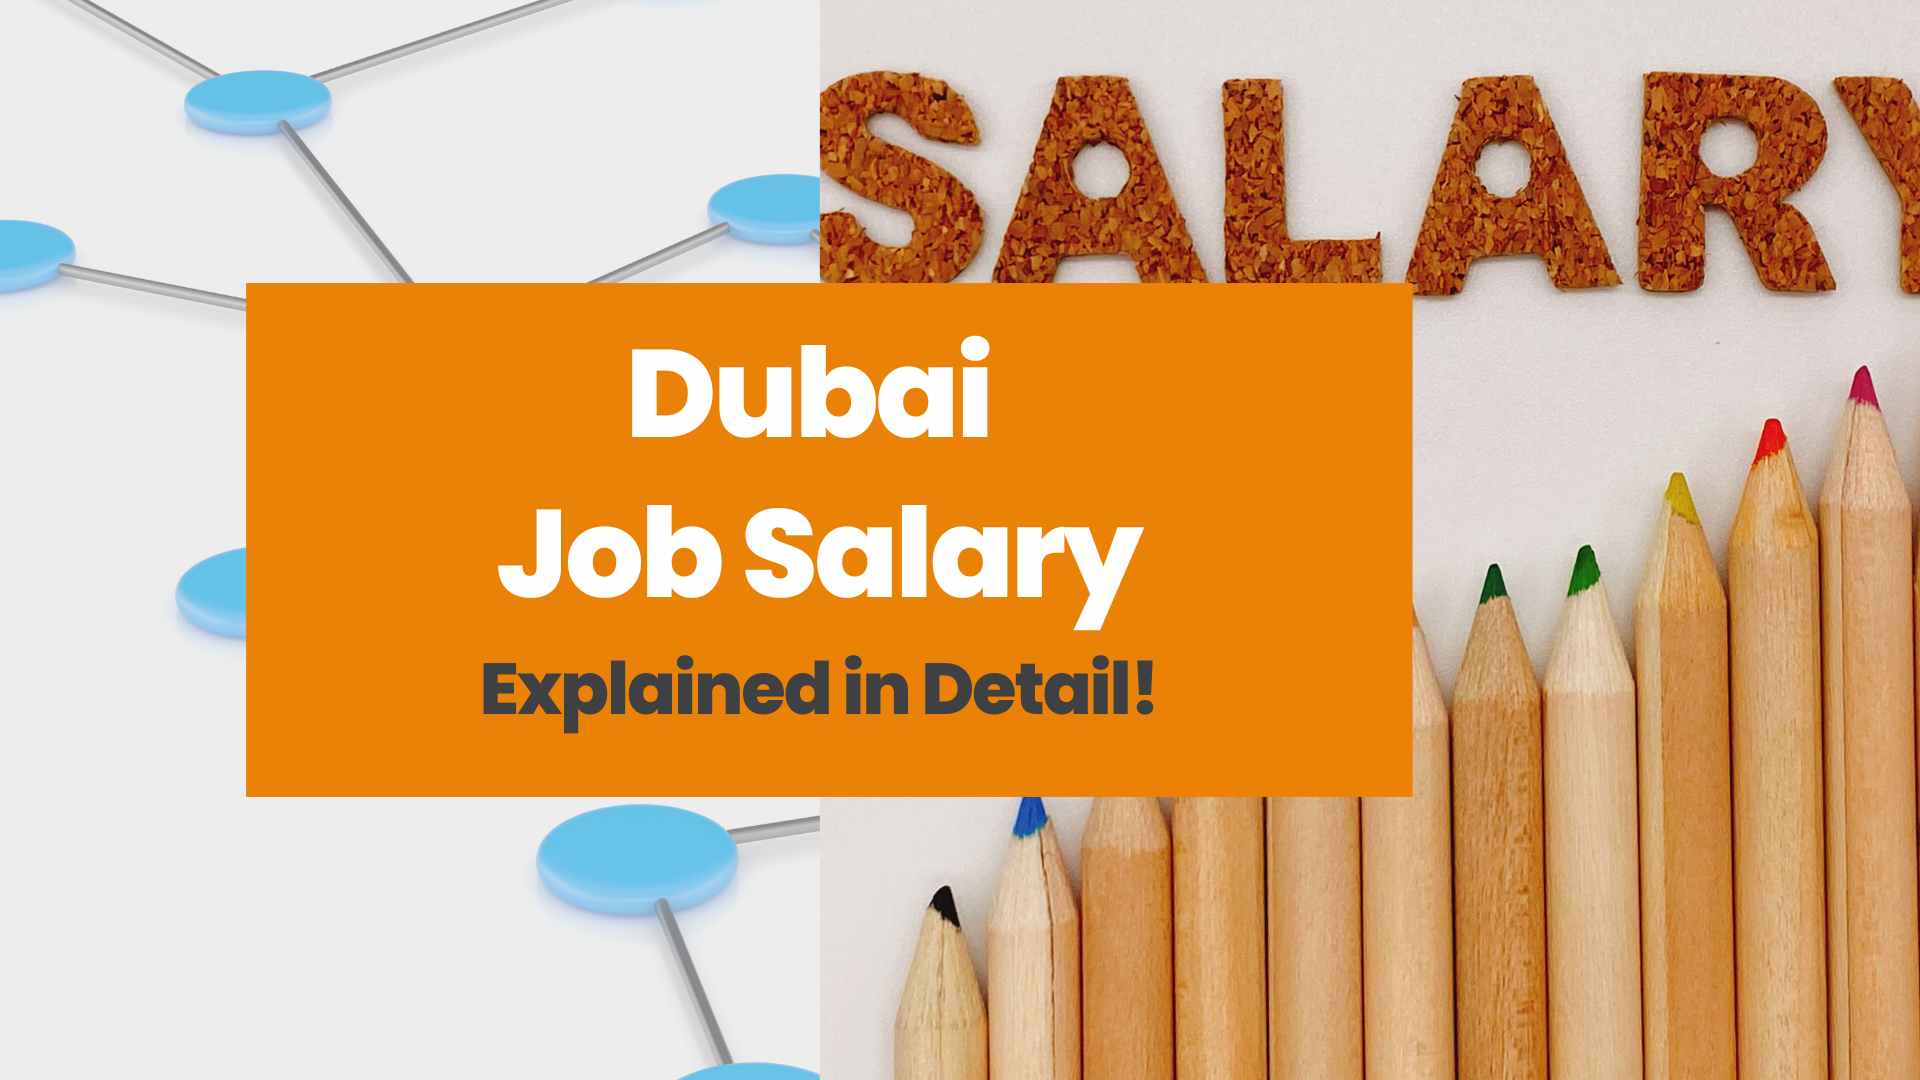 Dubai Job Salary Explained in Detail!